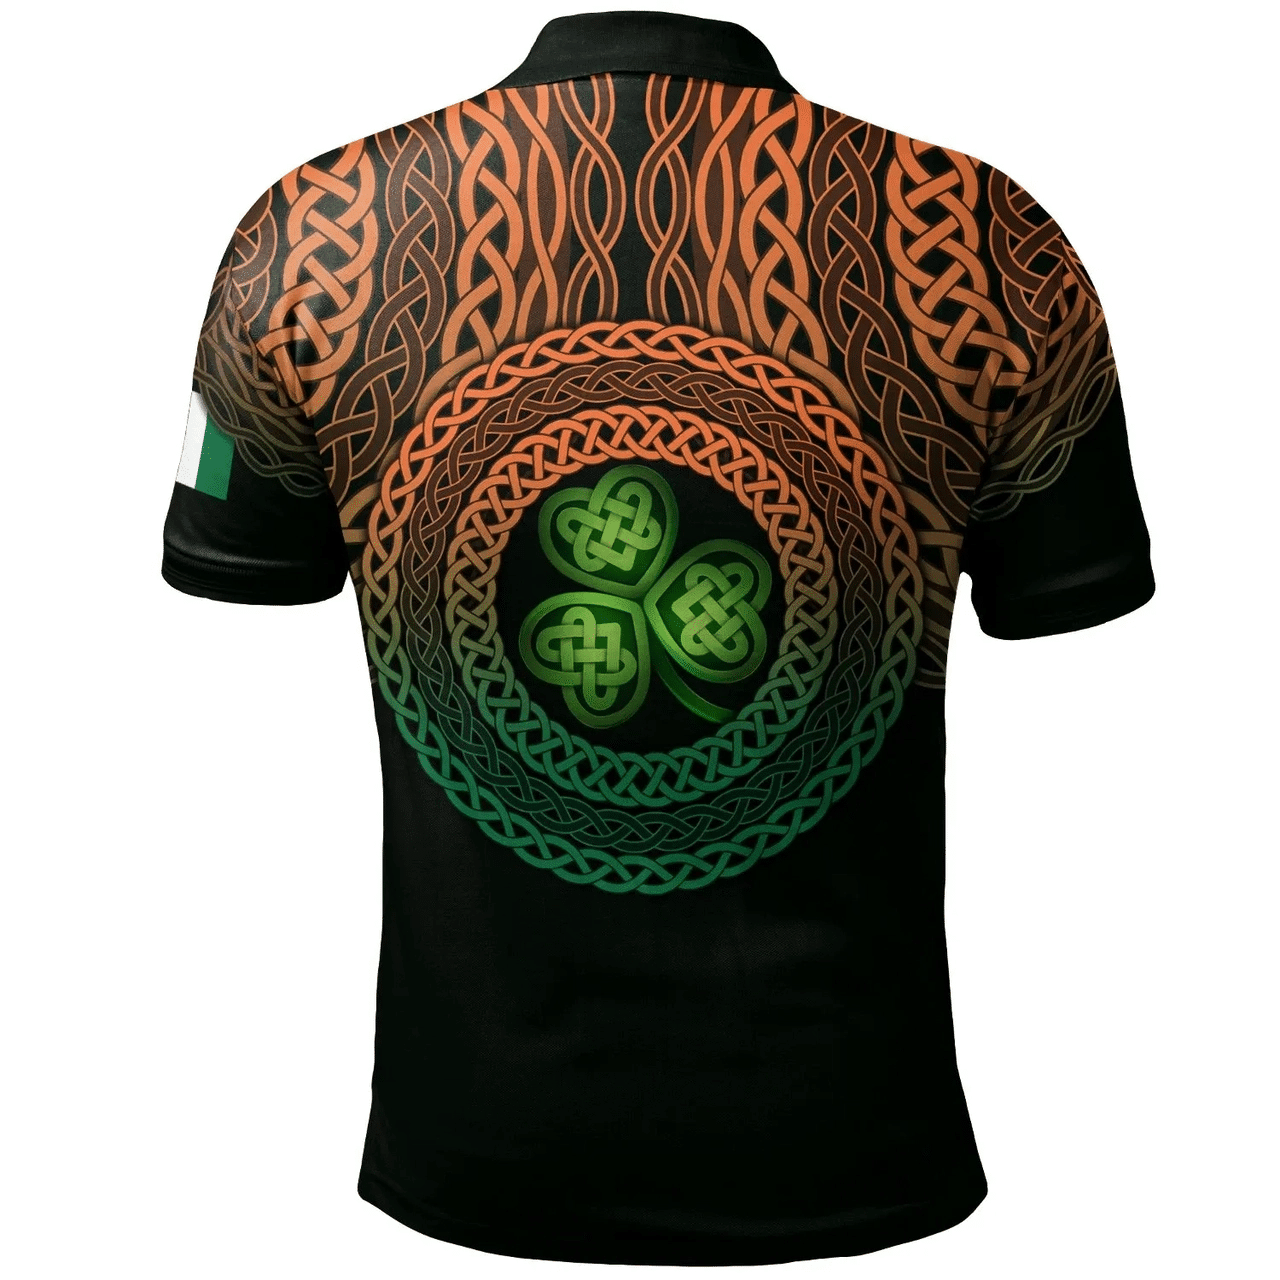 1stIreland Ireland Polo Shirt - Leahy or O'Lahy Irish Family Crest Polo Shirt - Celtic Pride A7 | 1stIreland.com